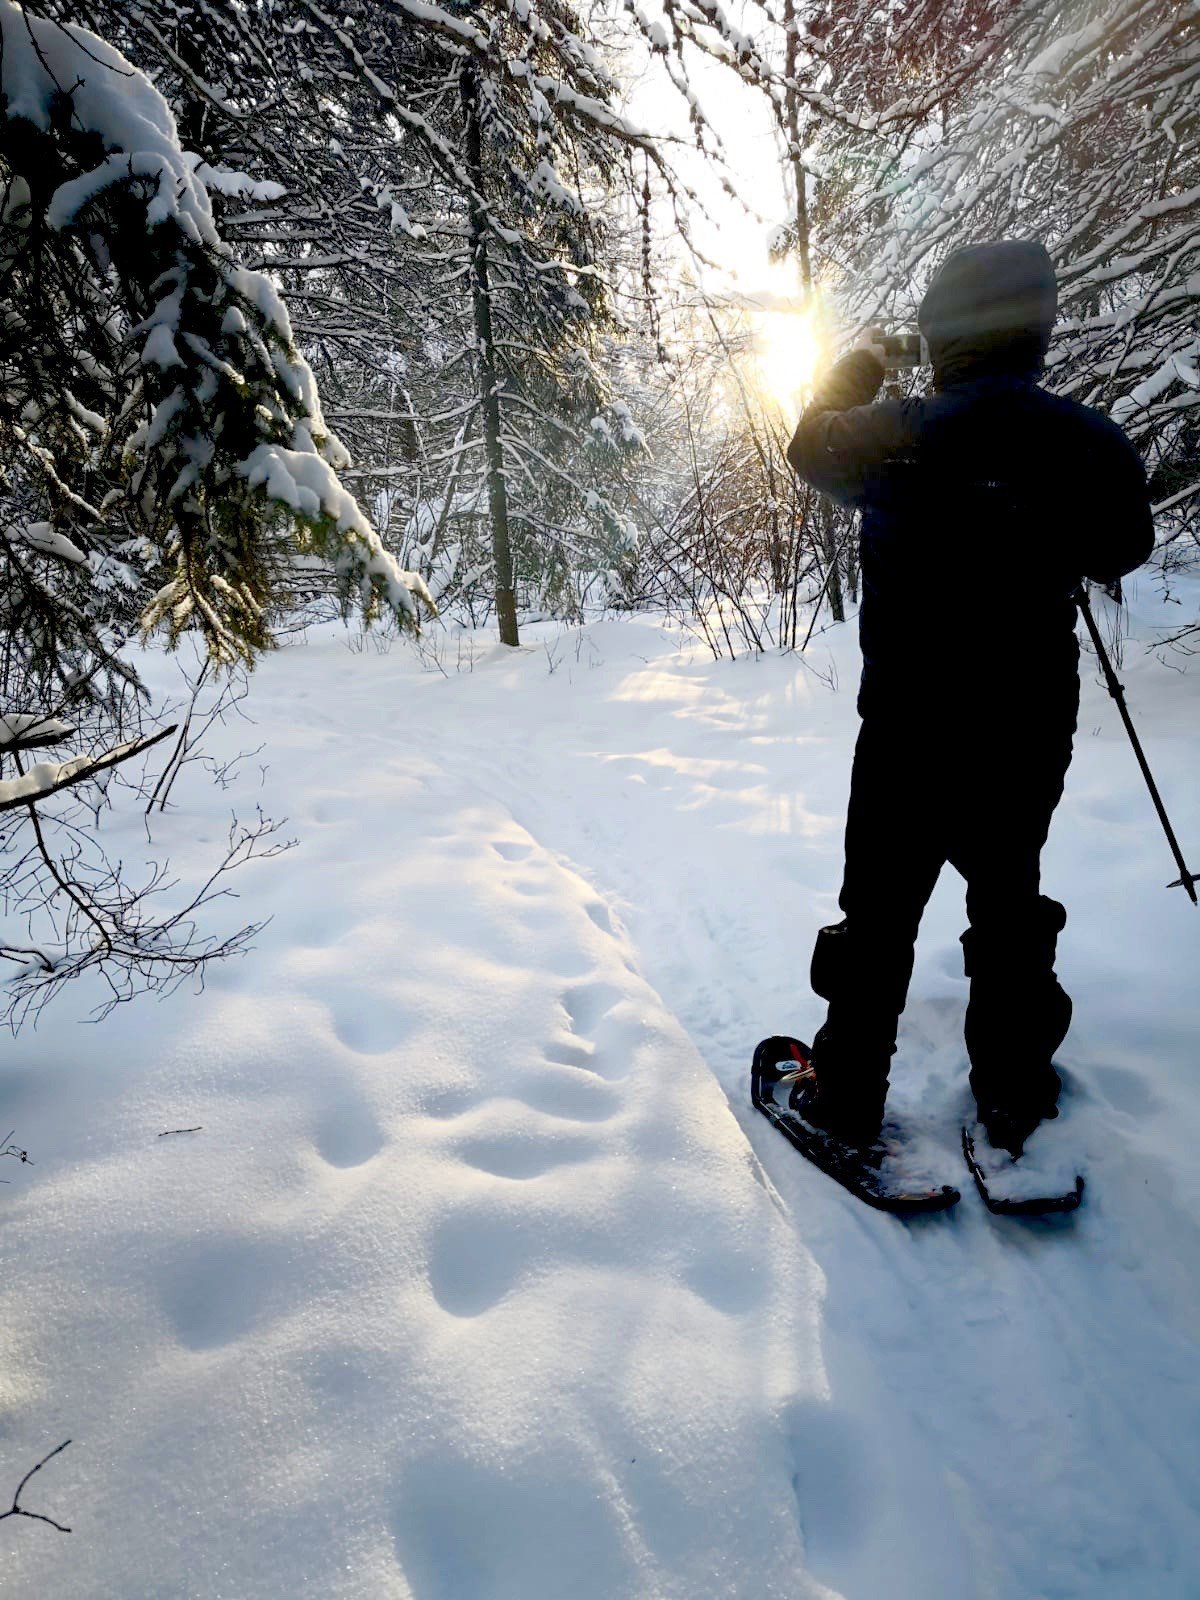 Trekking through the snow in Manitoba, Canada. Photo: Cameron Deuck